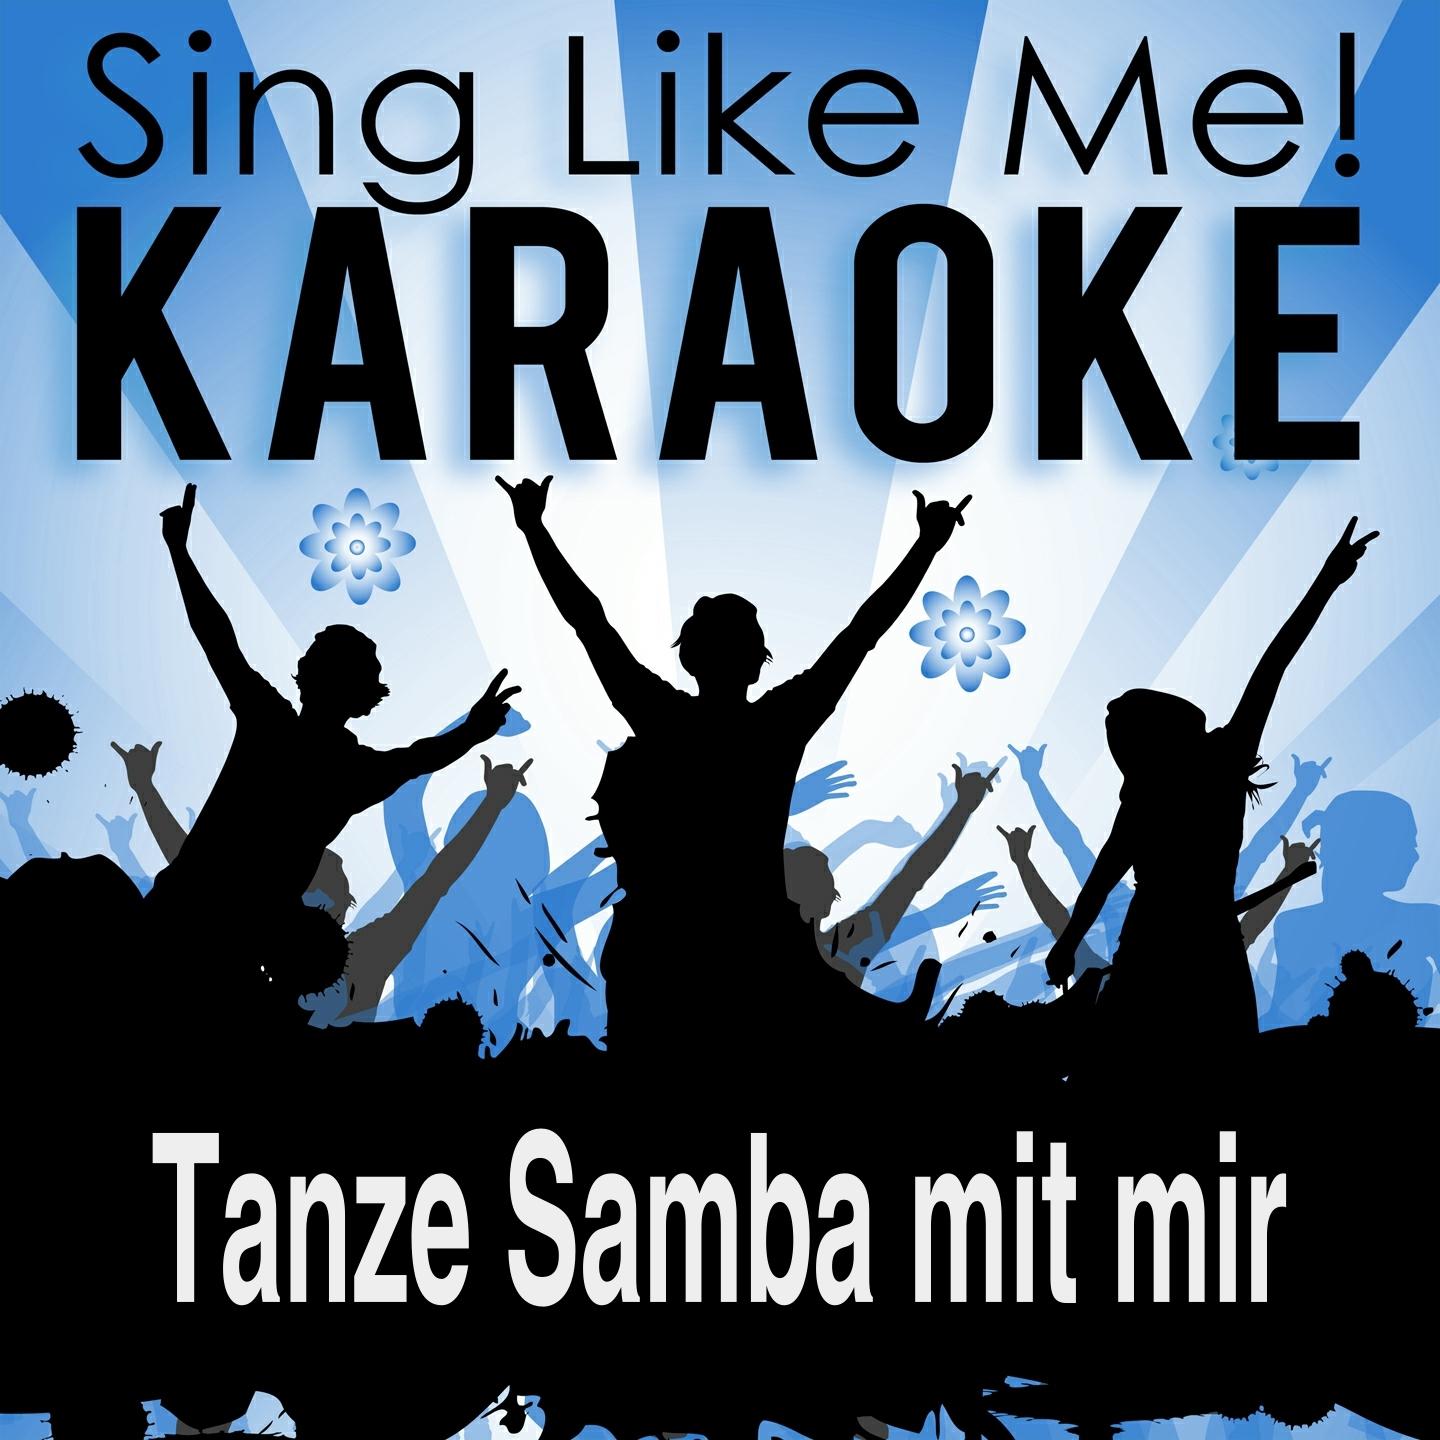 Tanze Samba mit mir (Karaoke Version With Guide Melody) (Originally Performed By Chris Marlow)